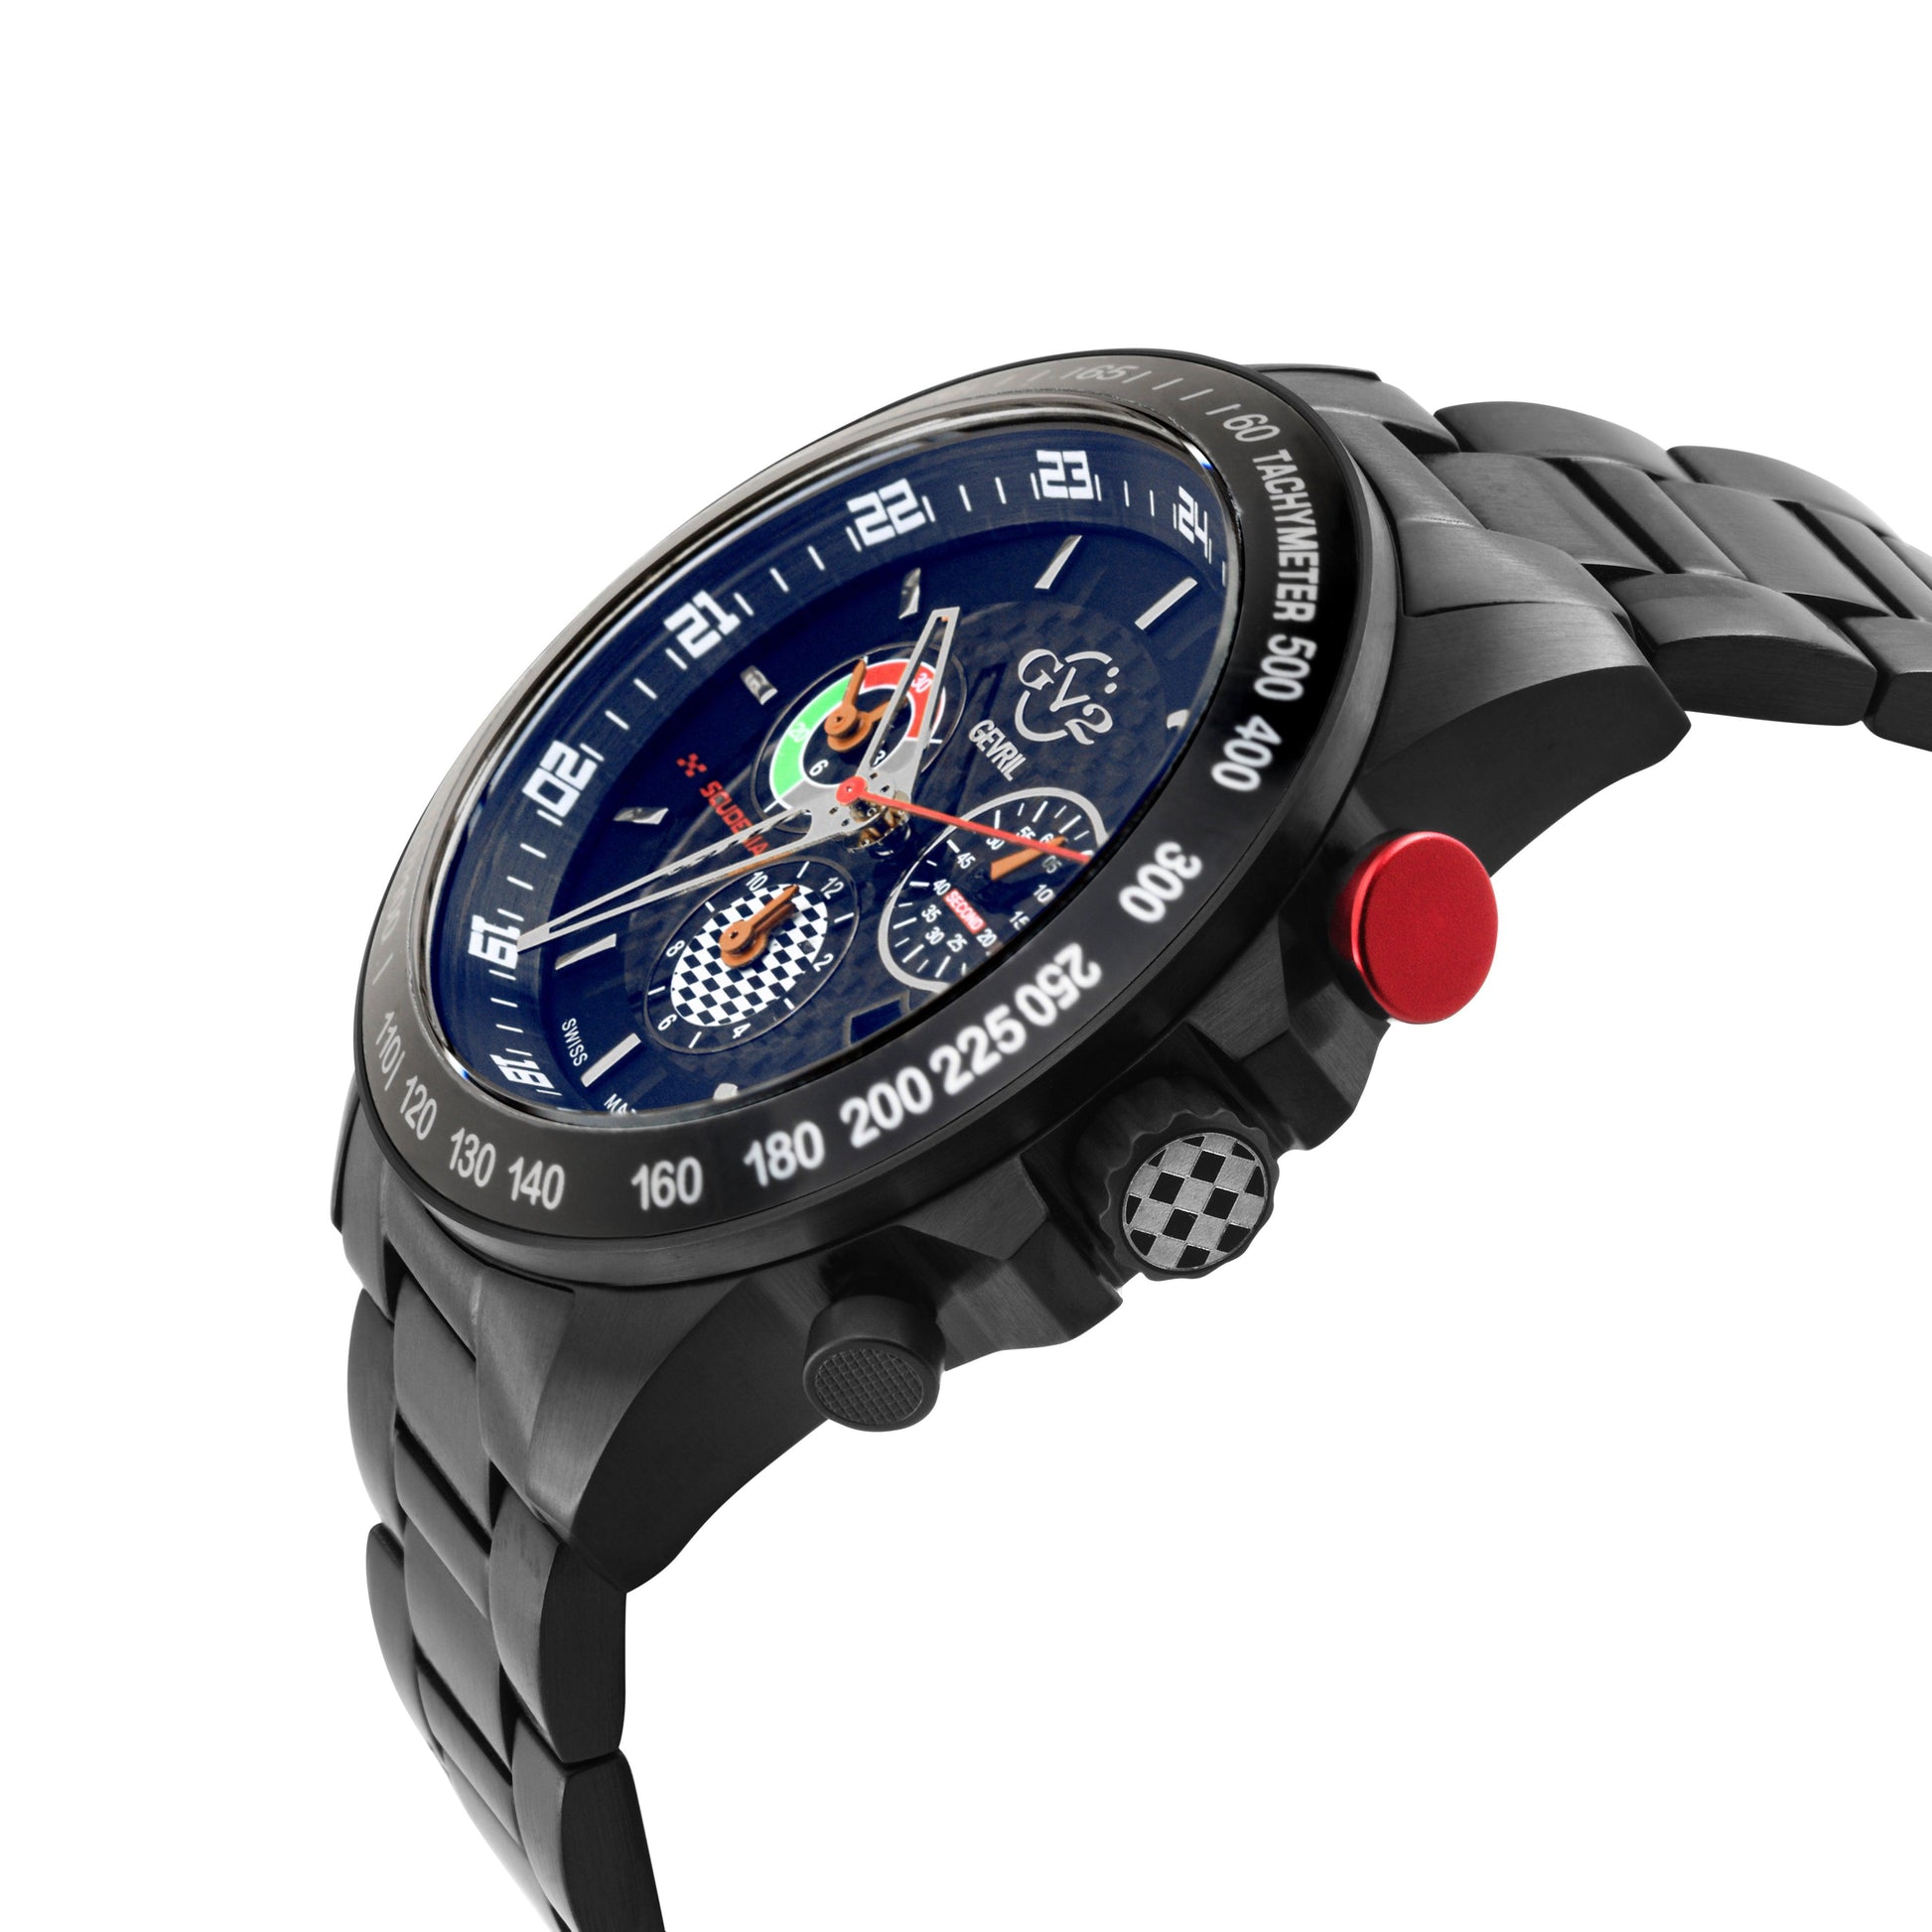 Gevril-Luxury-Swiss-Watches-GV2 Scuderia - Chronograph-9924B